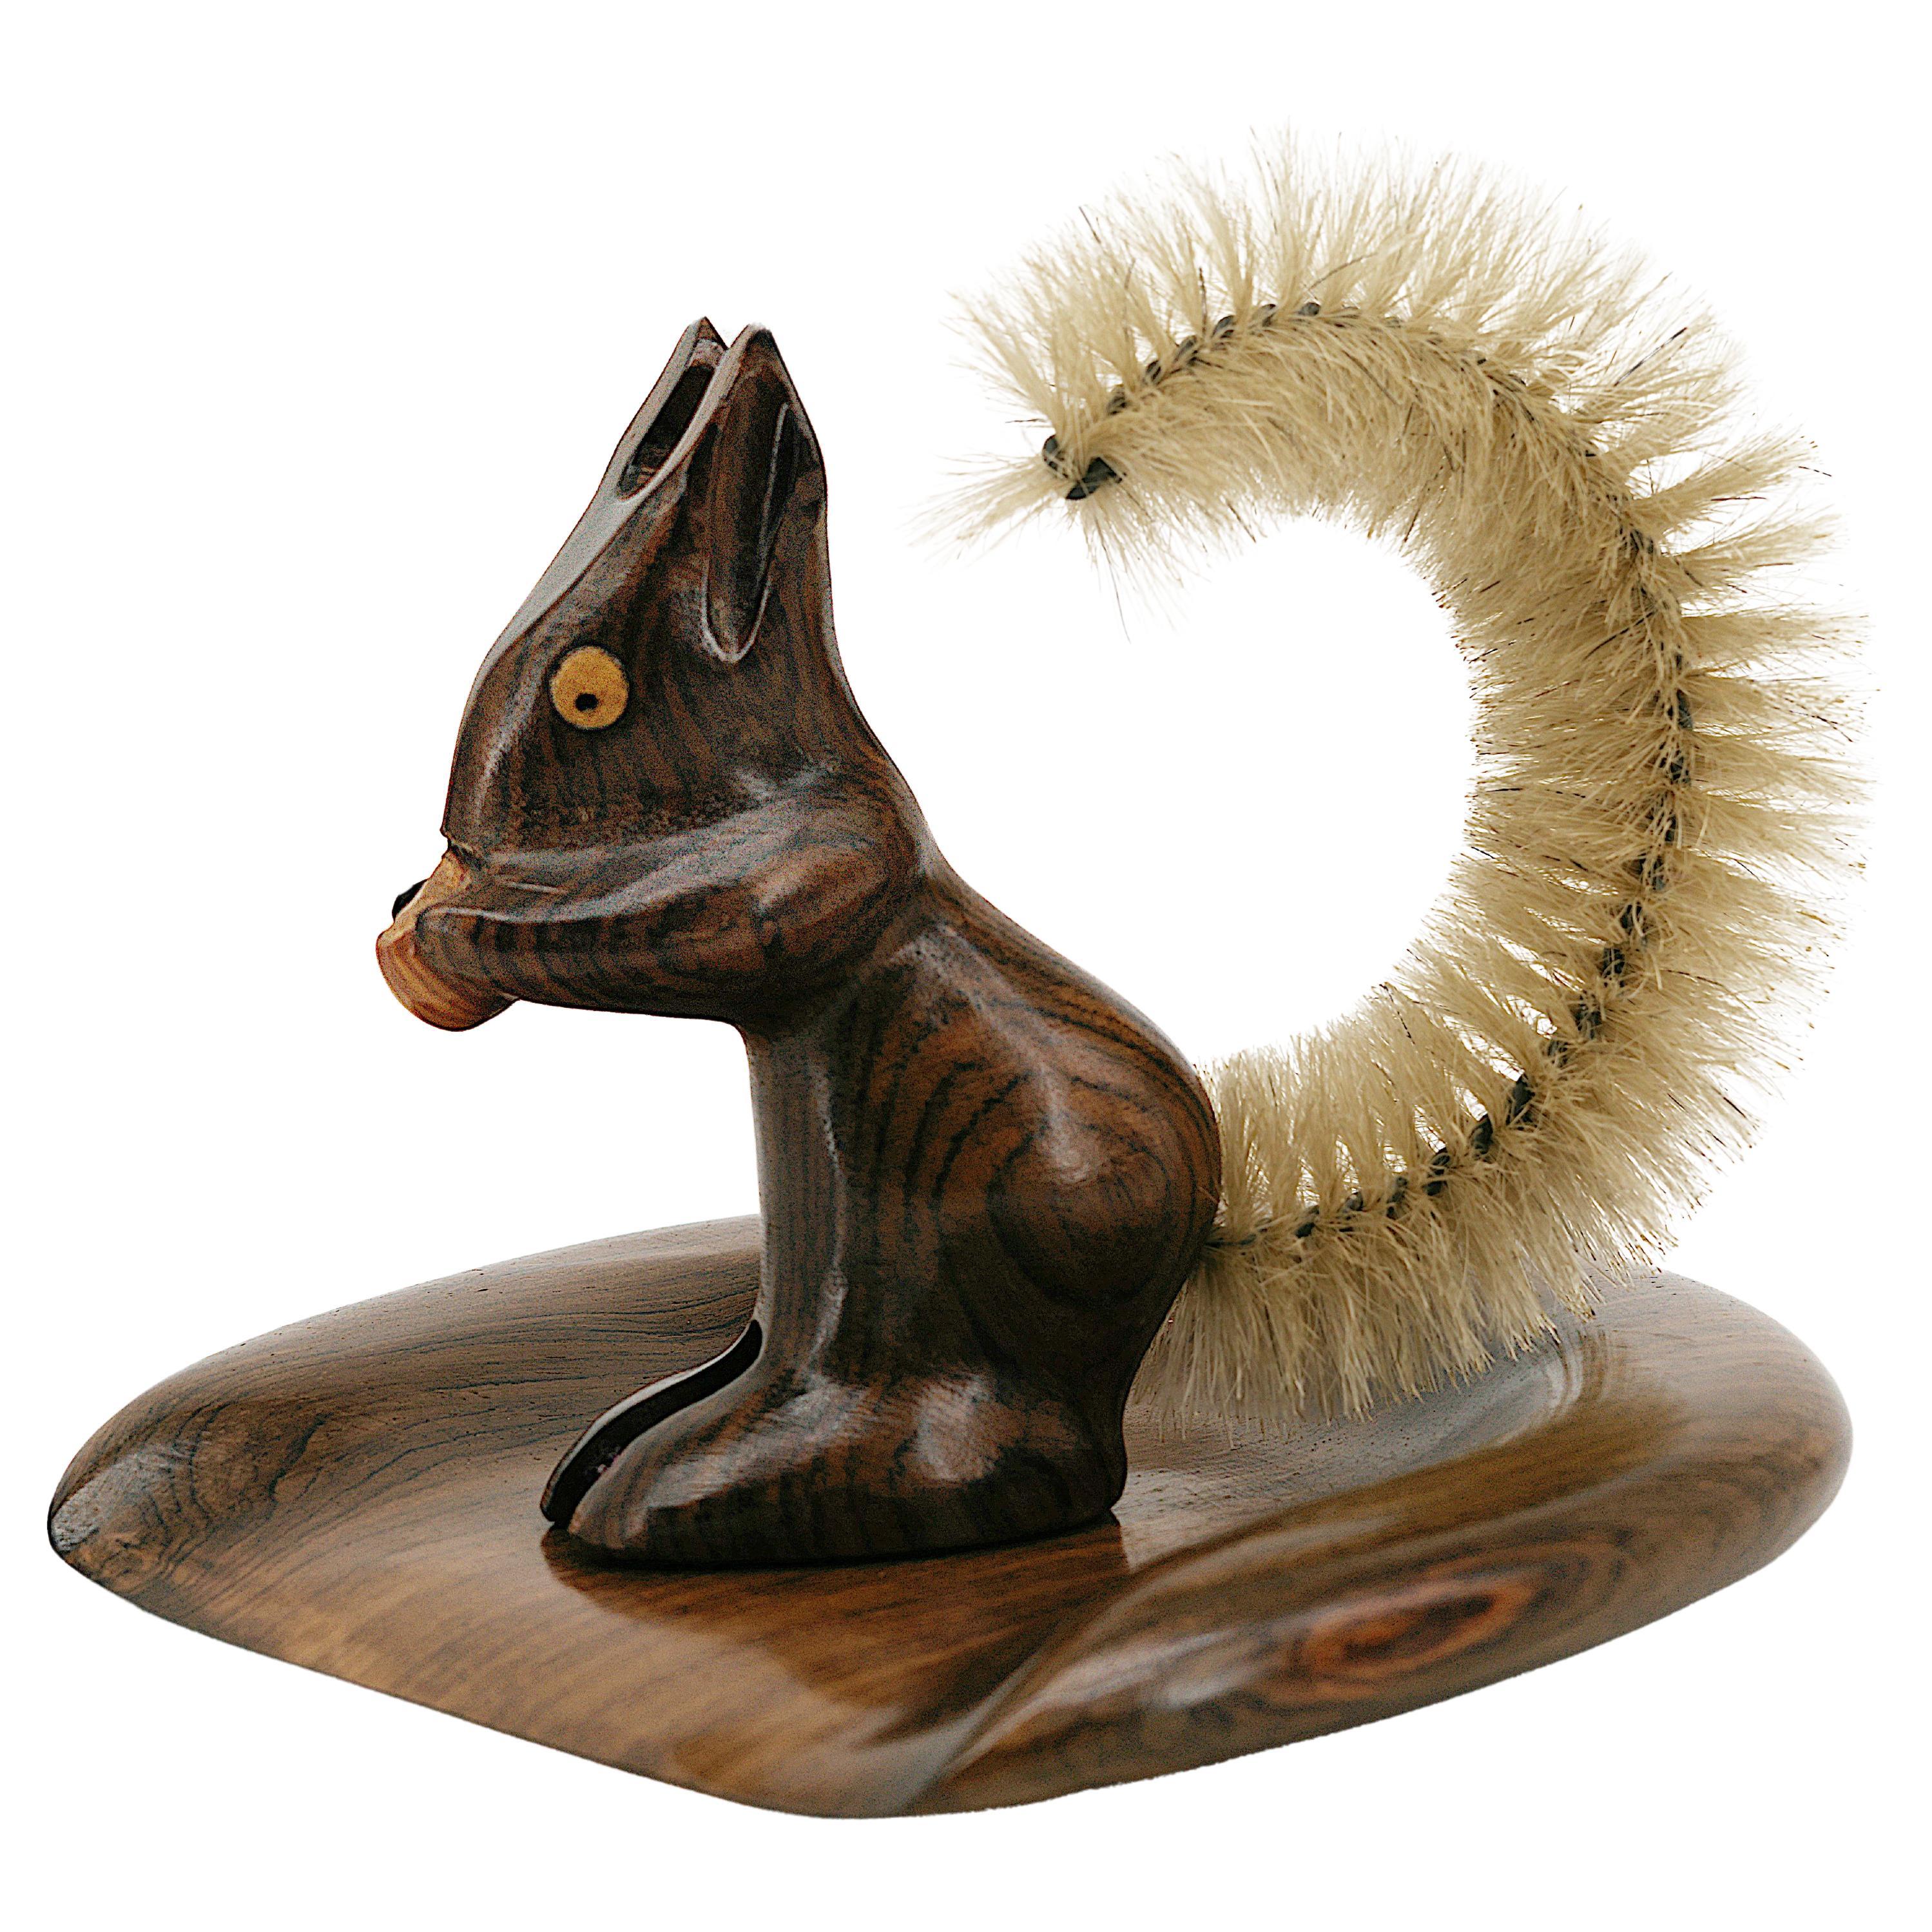 Max Meder, Hand Carved Wooden Squirrel Brush & Pan, France, 1950s For Sale 6